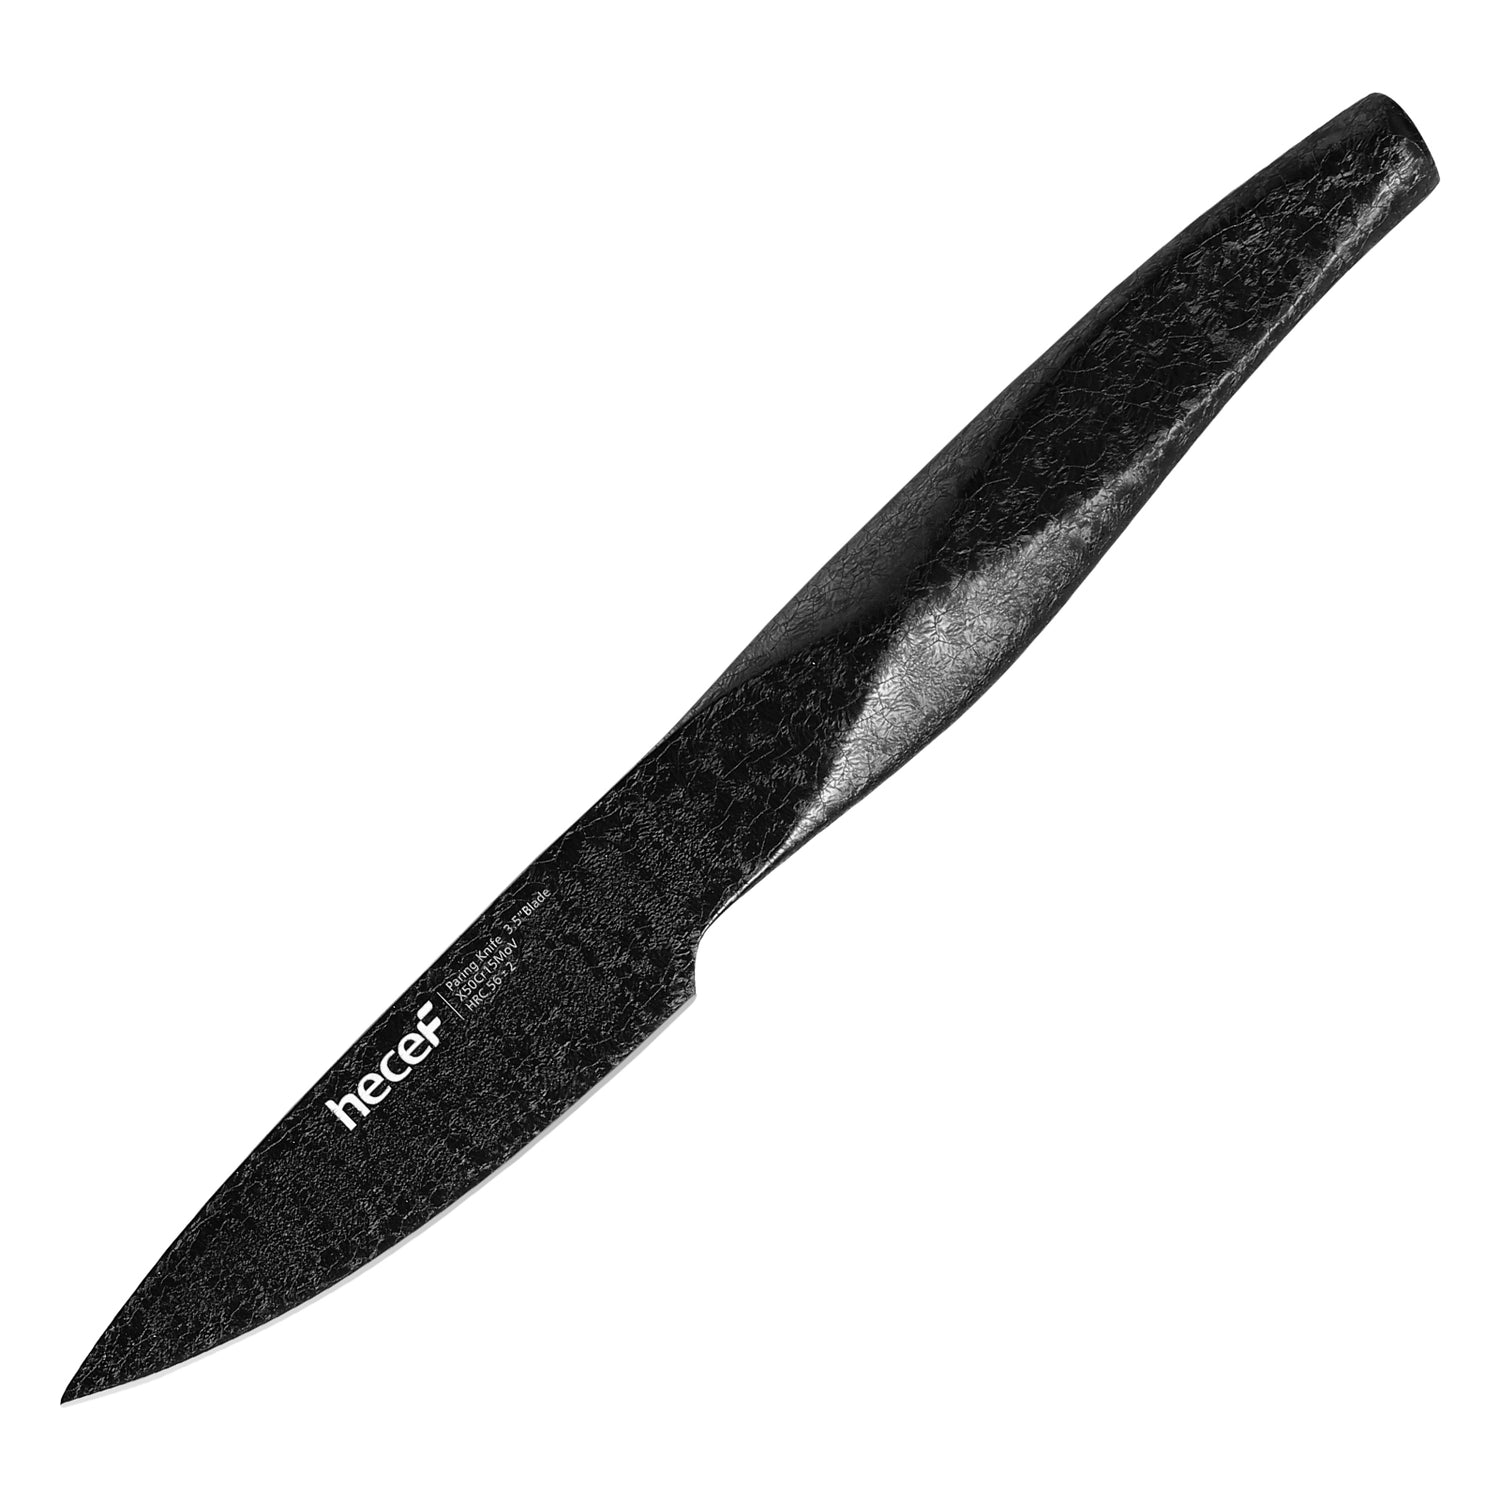 hecef Ice Crack Paring Knife 3.5 inch, Small Kitchen Knife for Peeling, Super Sharp Stainless Steel & Diamond Steel Ergonomic Handle, Black - Hecef Kitchen